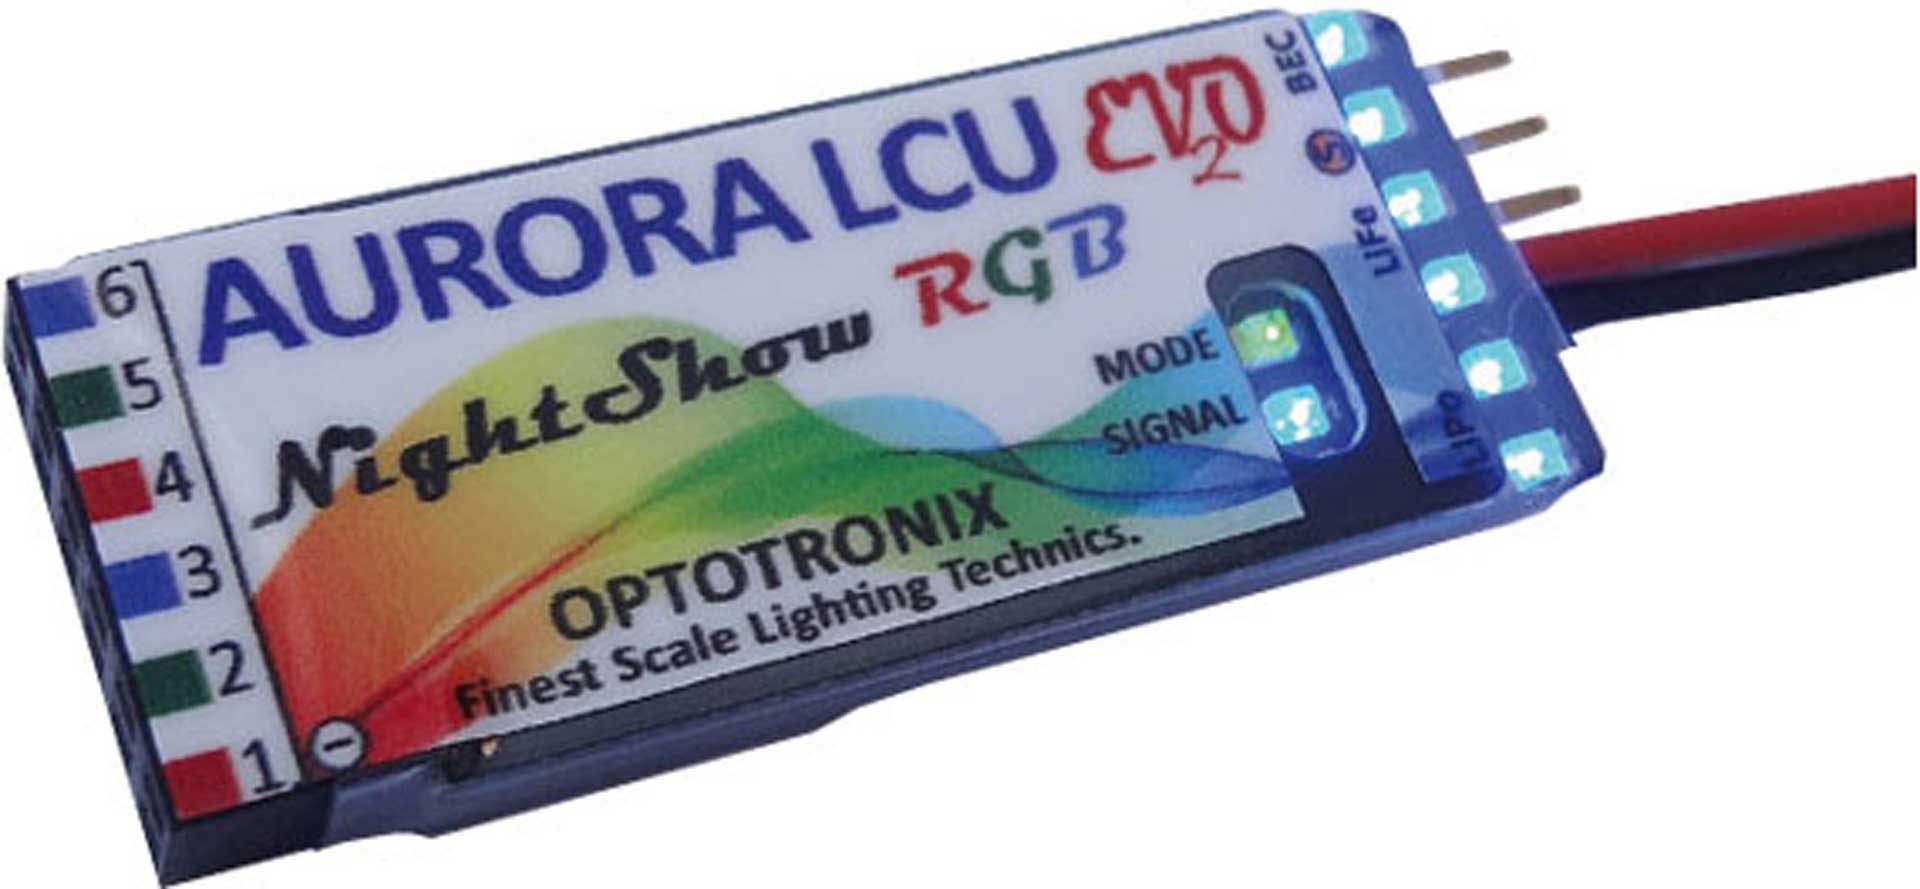 OPTOTRONIX AURORA EVO2 LCU NIGHT SHOW RGB